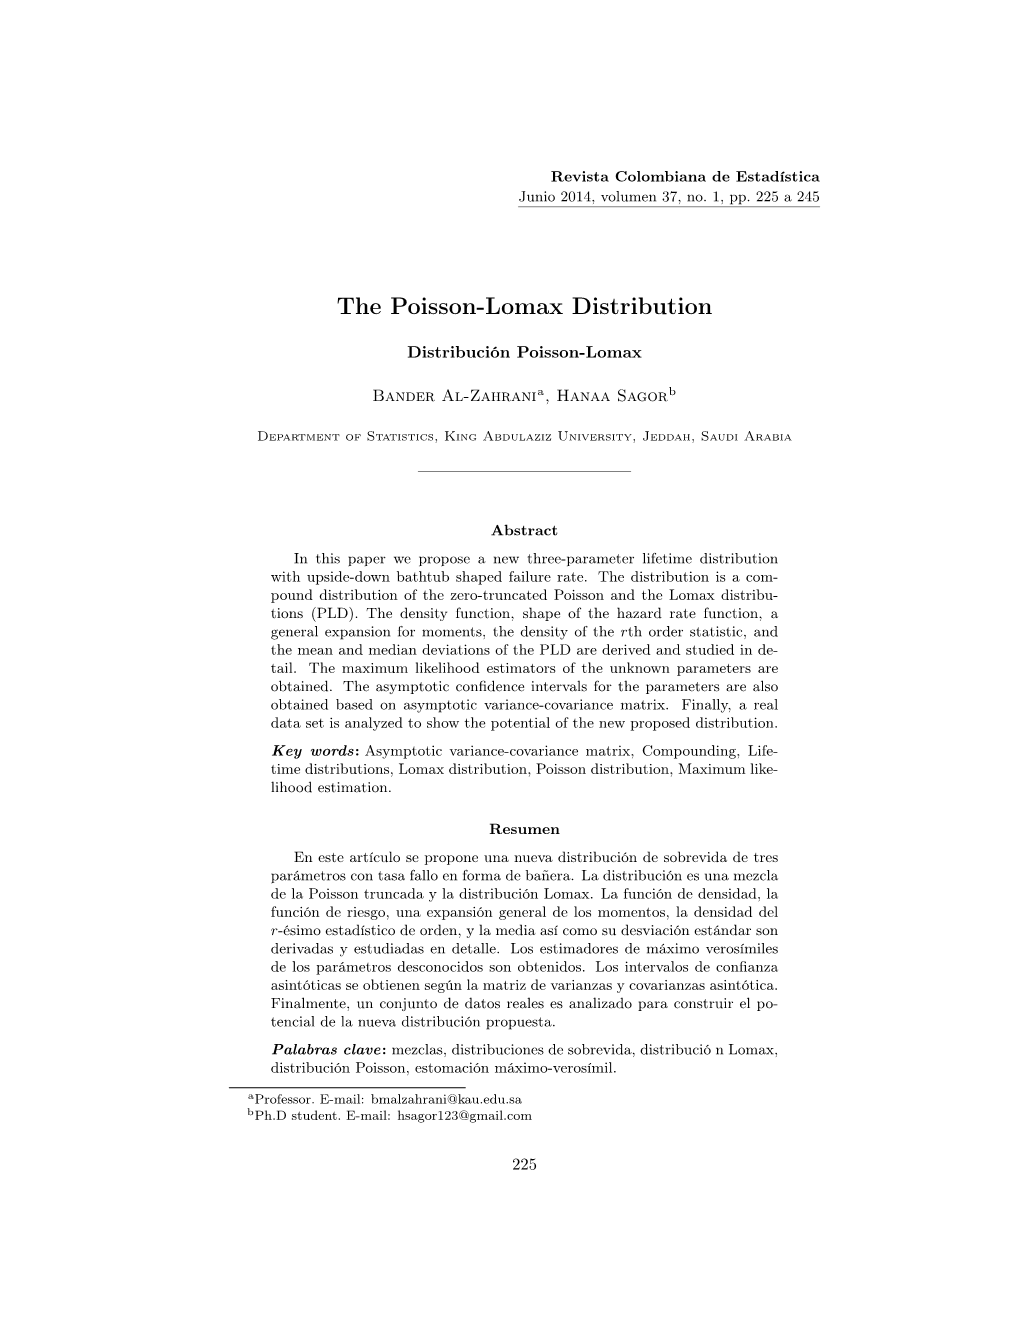 The Poisson-Lomax Distribution